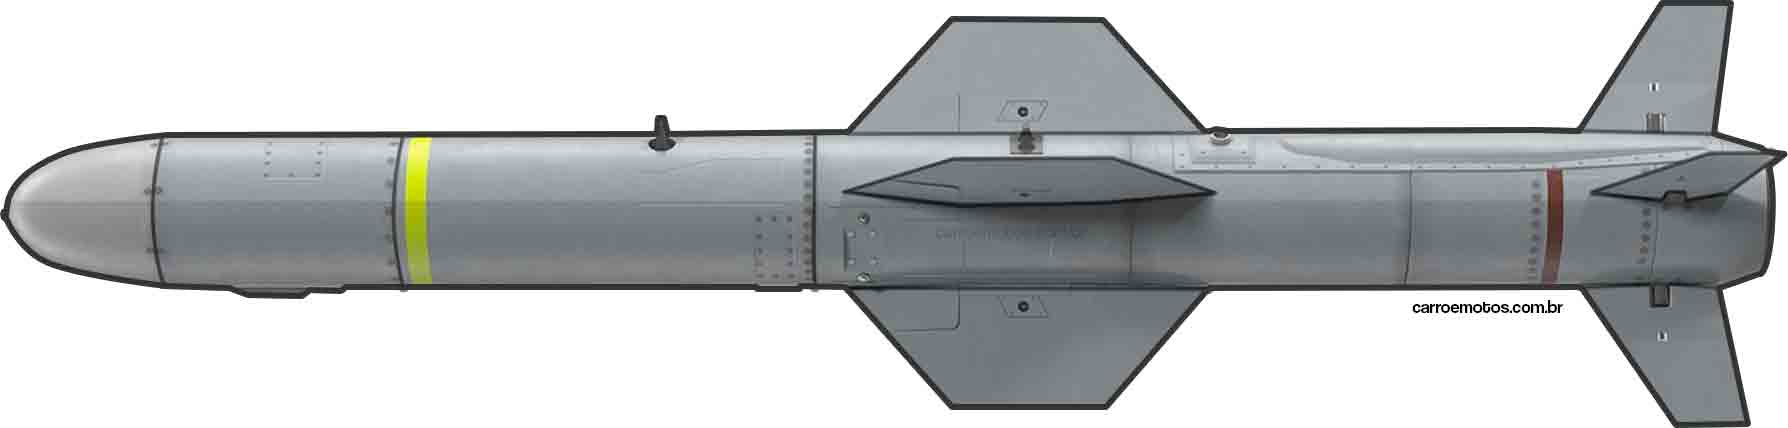 UGM-84L Harpoon Block II Anti-Schiffs-Rakete. Foto: Carro e Motos